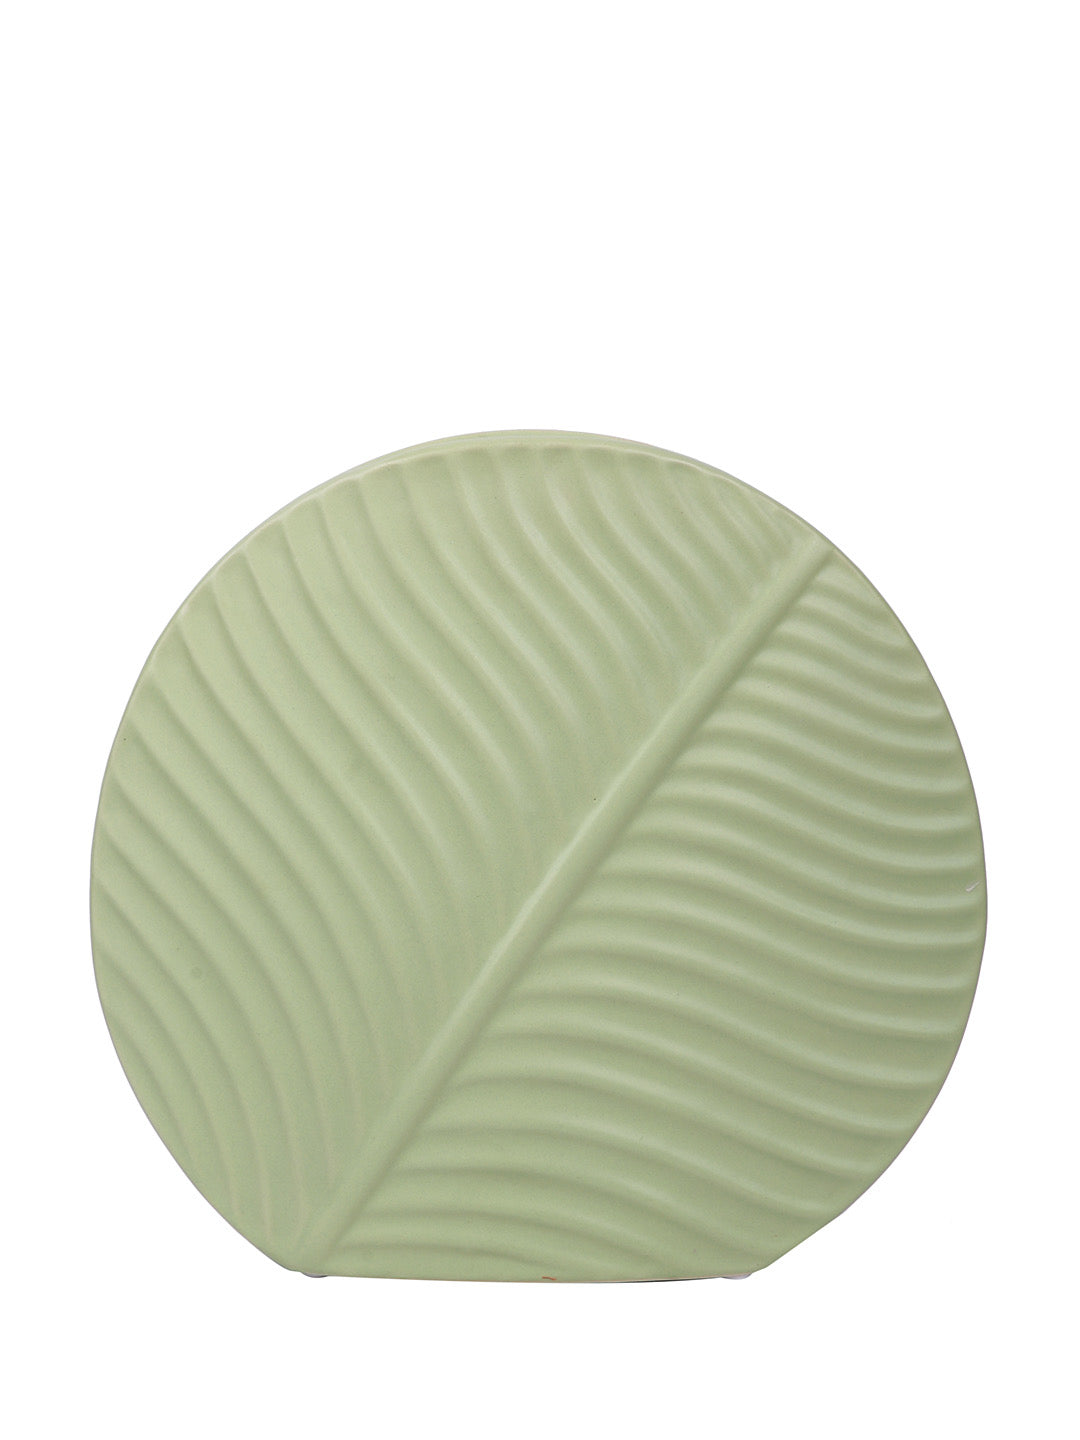 Leaf Pattern Ceramic Vase - Default Title (VASC22466)